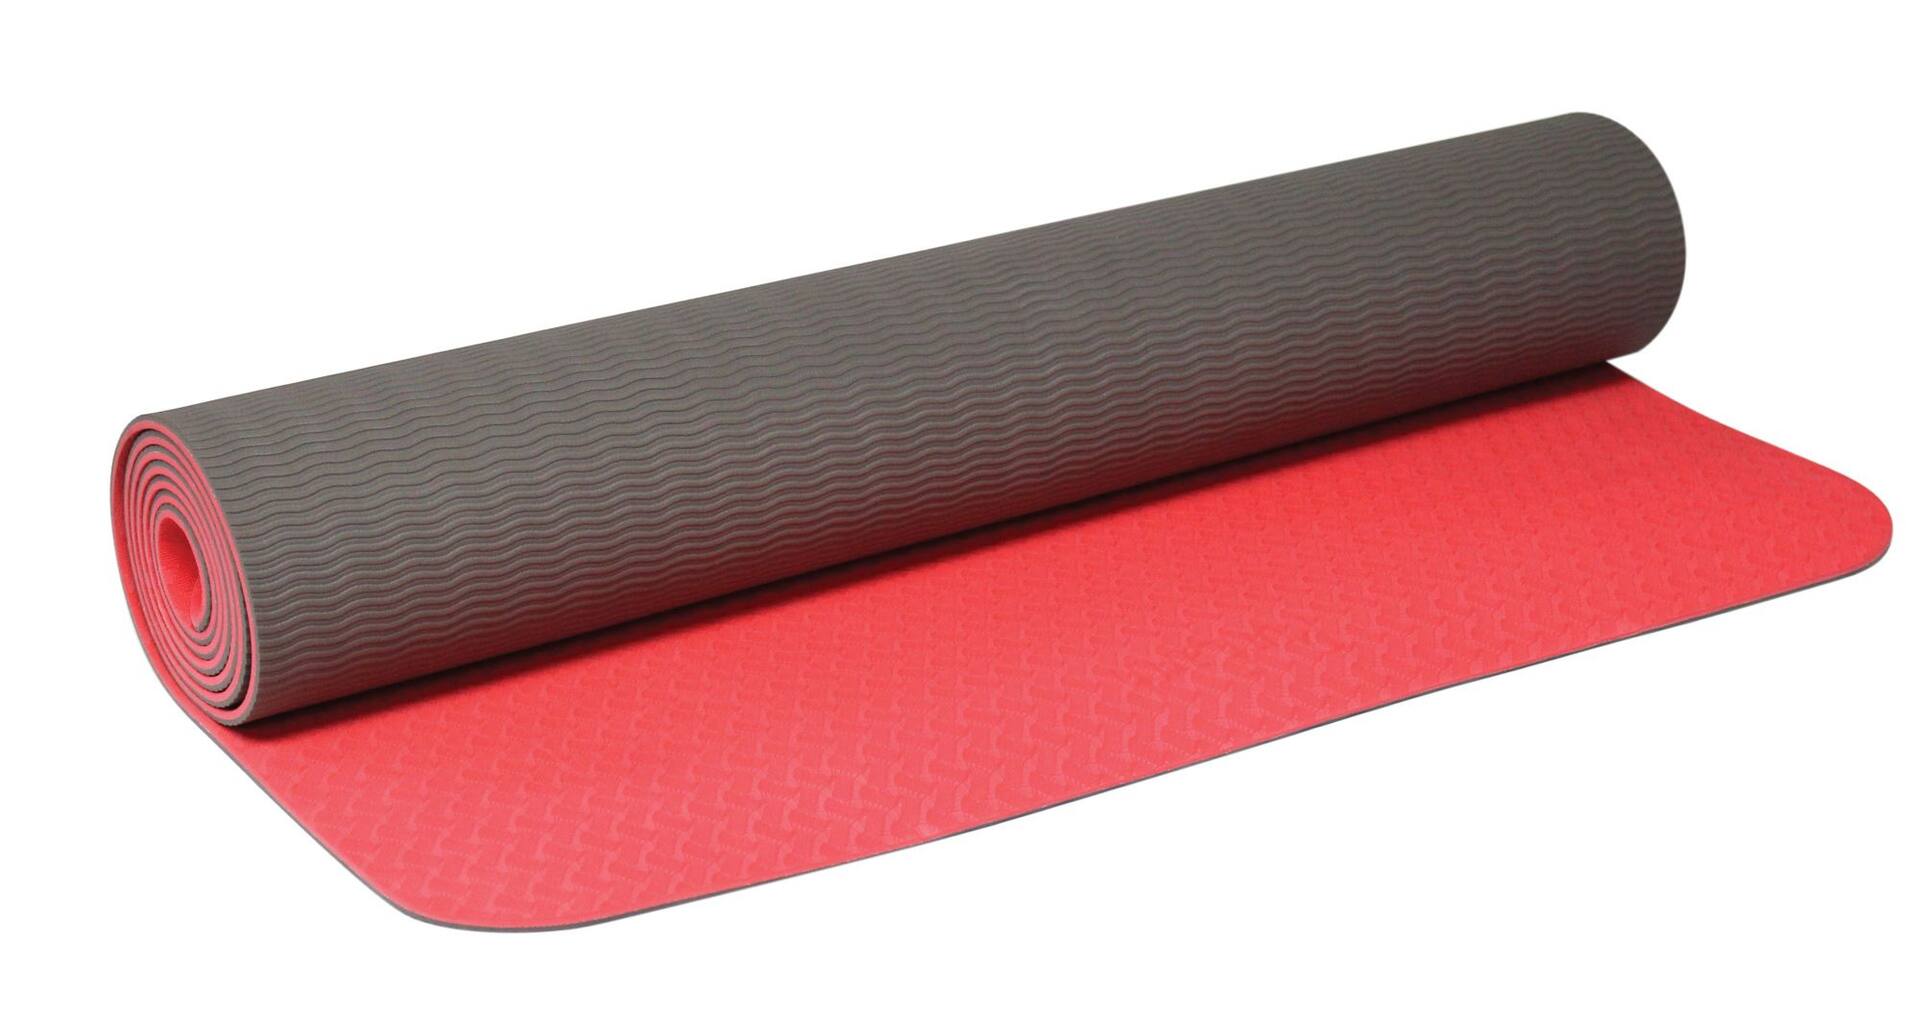 round large rubber meditation mat - Yoga Essentials Brand OEM